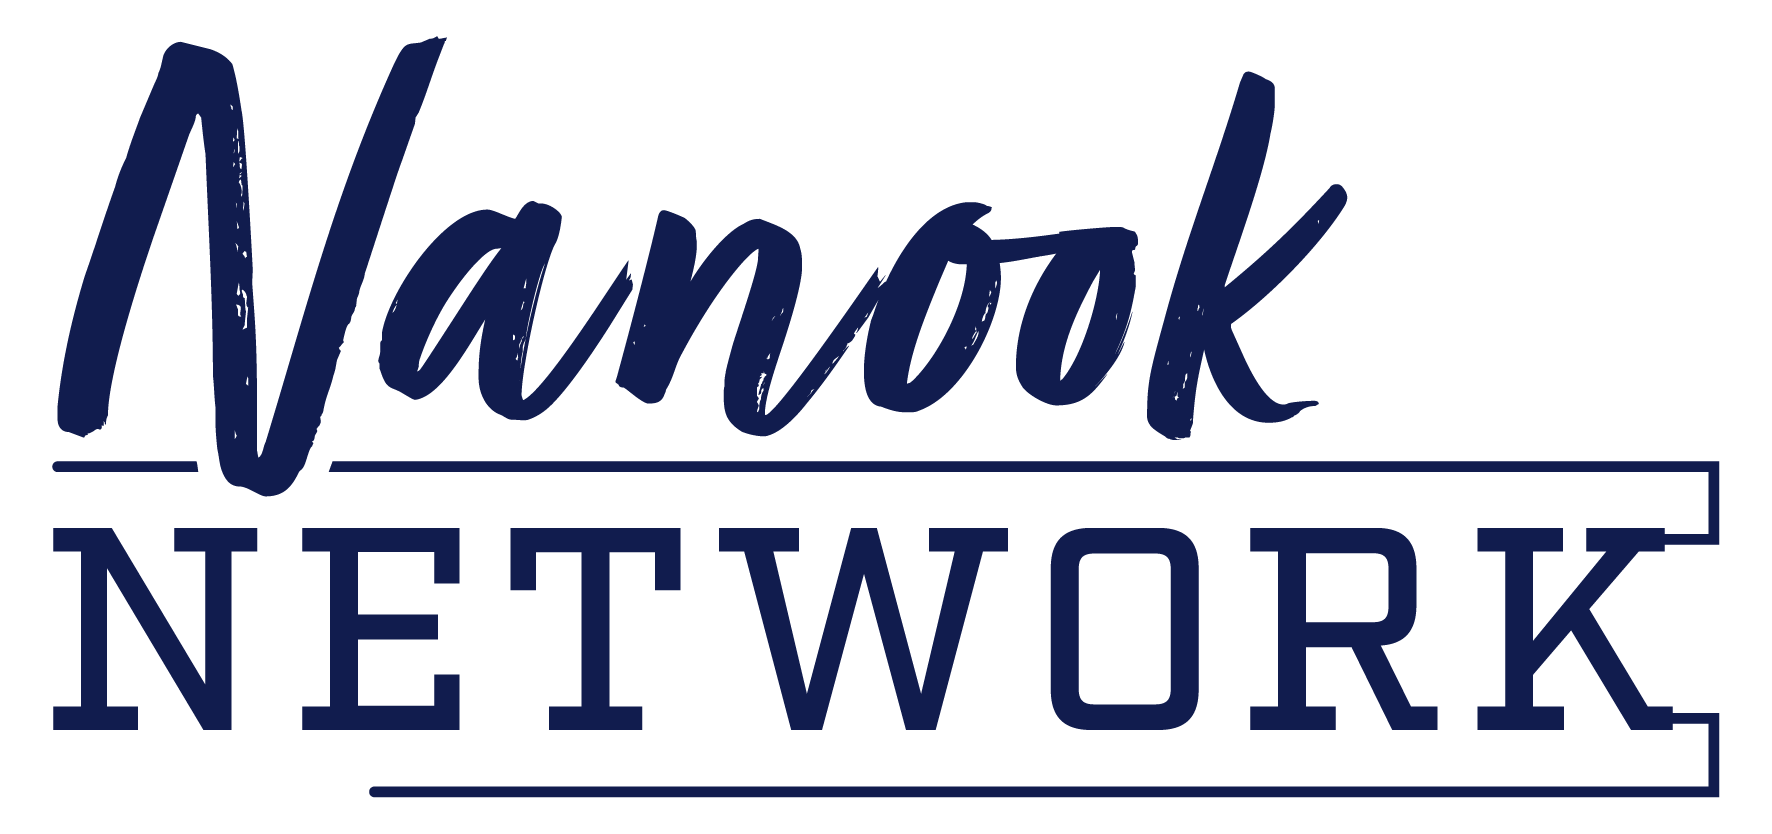 Nanook Network logo